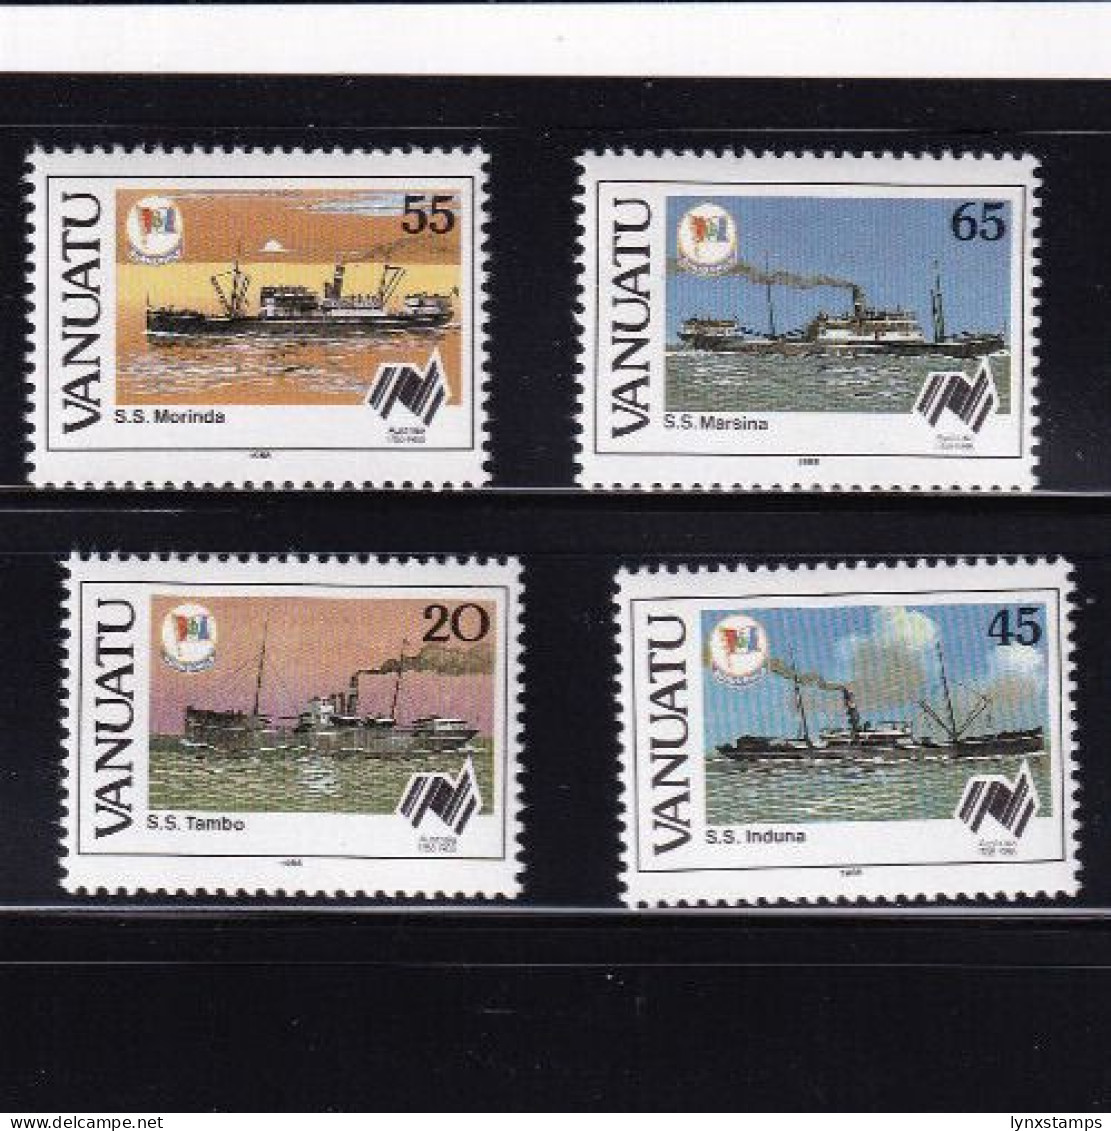 LI05 Vanuatu 1988 200th Anniversary Of The Australian Settlement - Freighters - Vanuatu (1980-...)